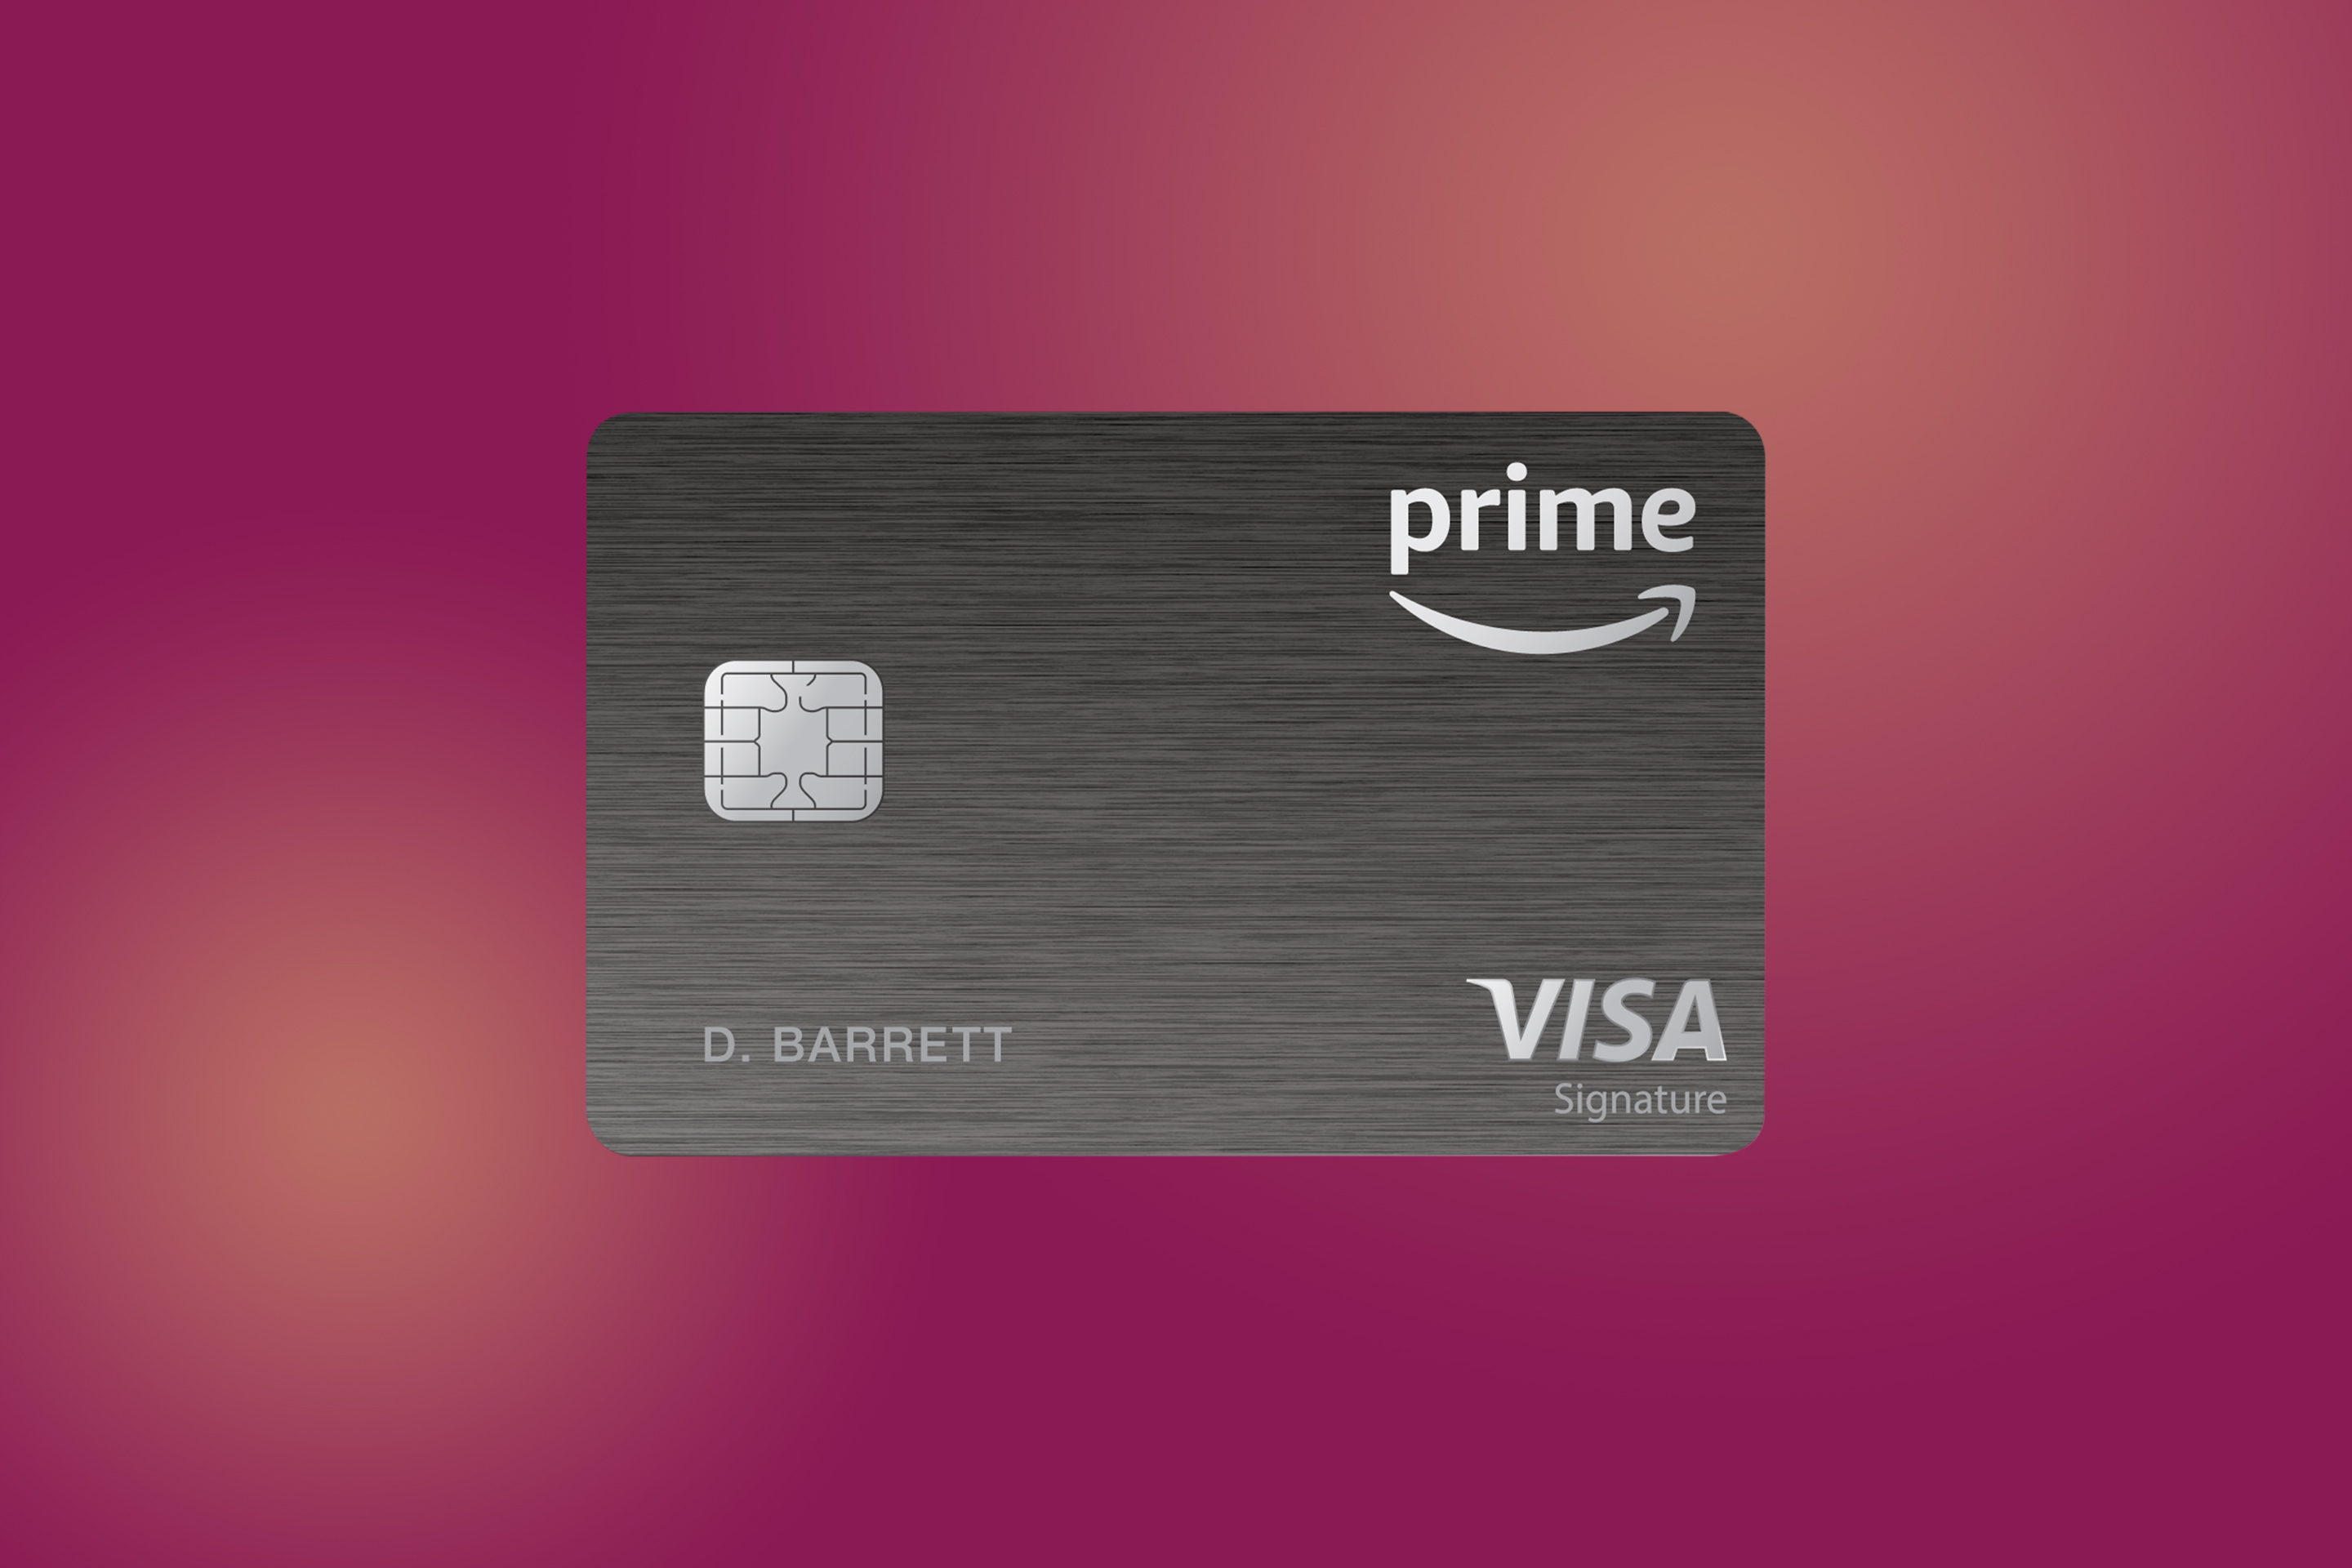 amazon prime card